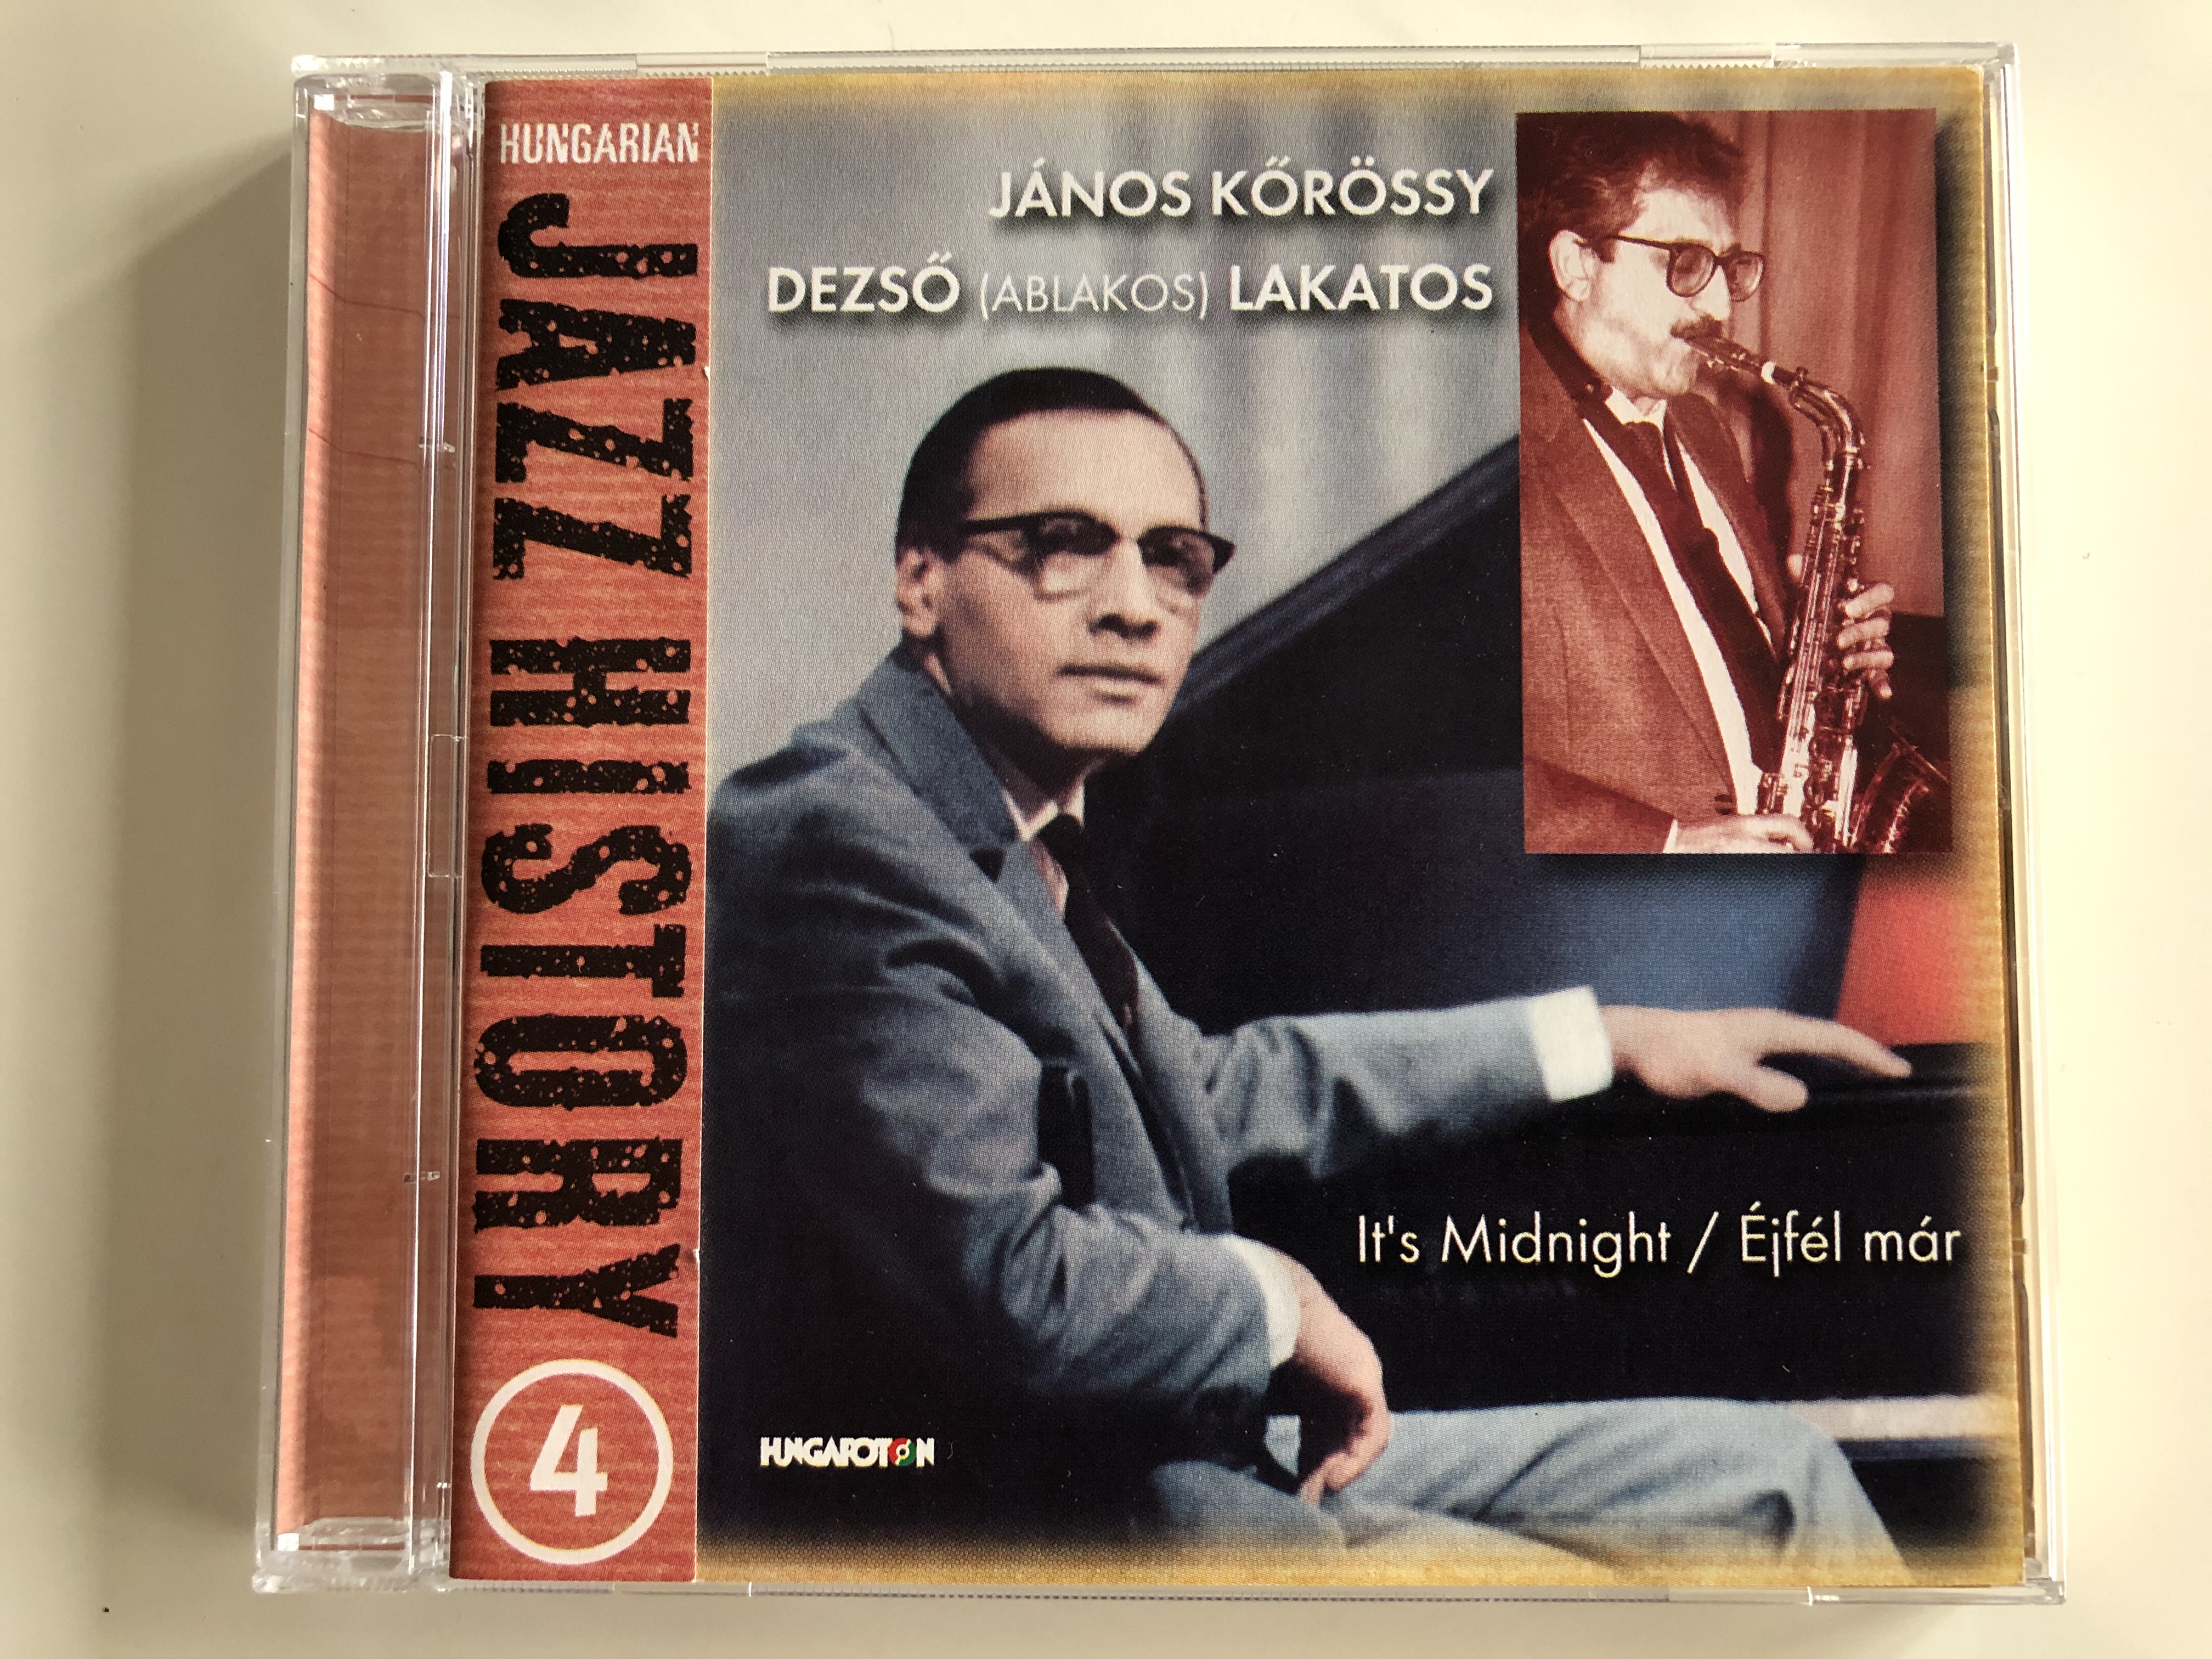 j-nos-k-r-ssy-dezs-ablakos-lakatos-it-s-midnight-jf-l-m-r-hungarian-jazz-history-4-hungaroton-audio-cd-2001-hcd-71044-1-.jpg